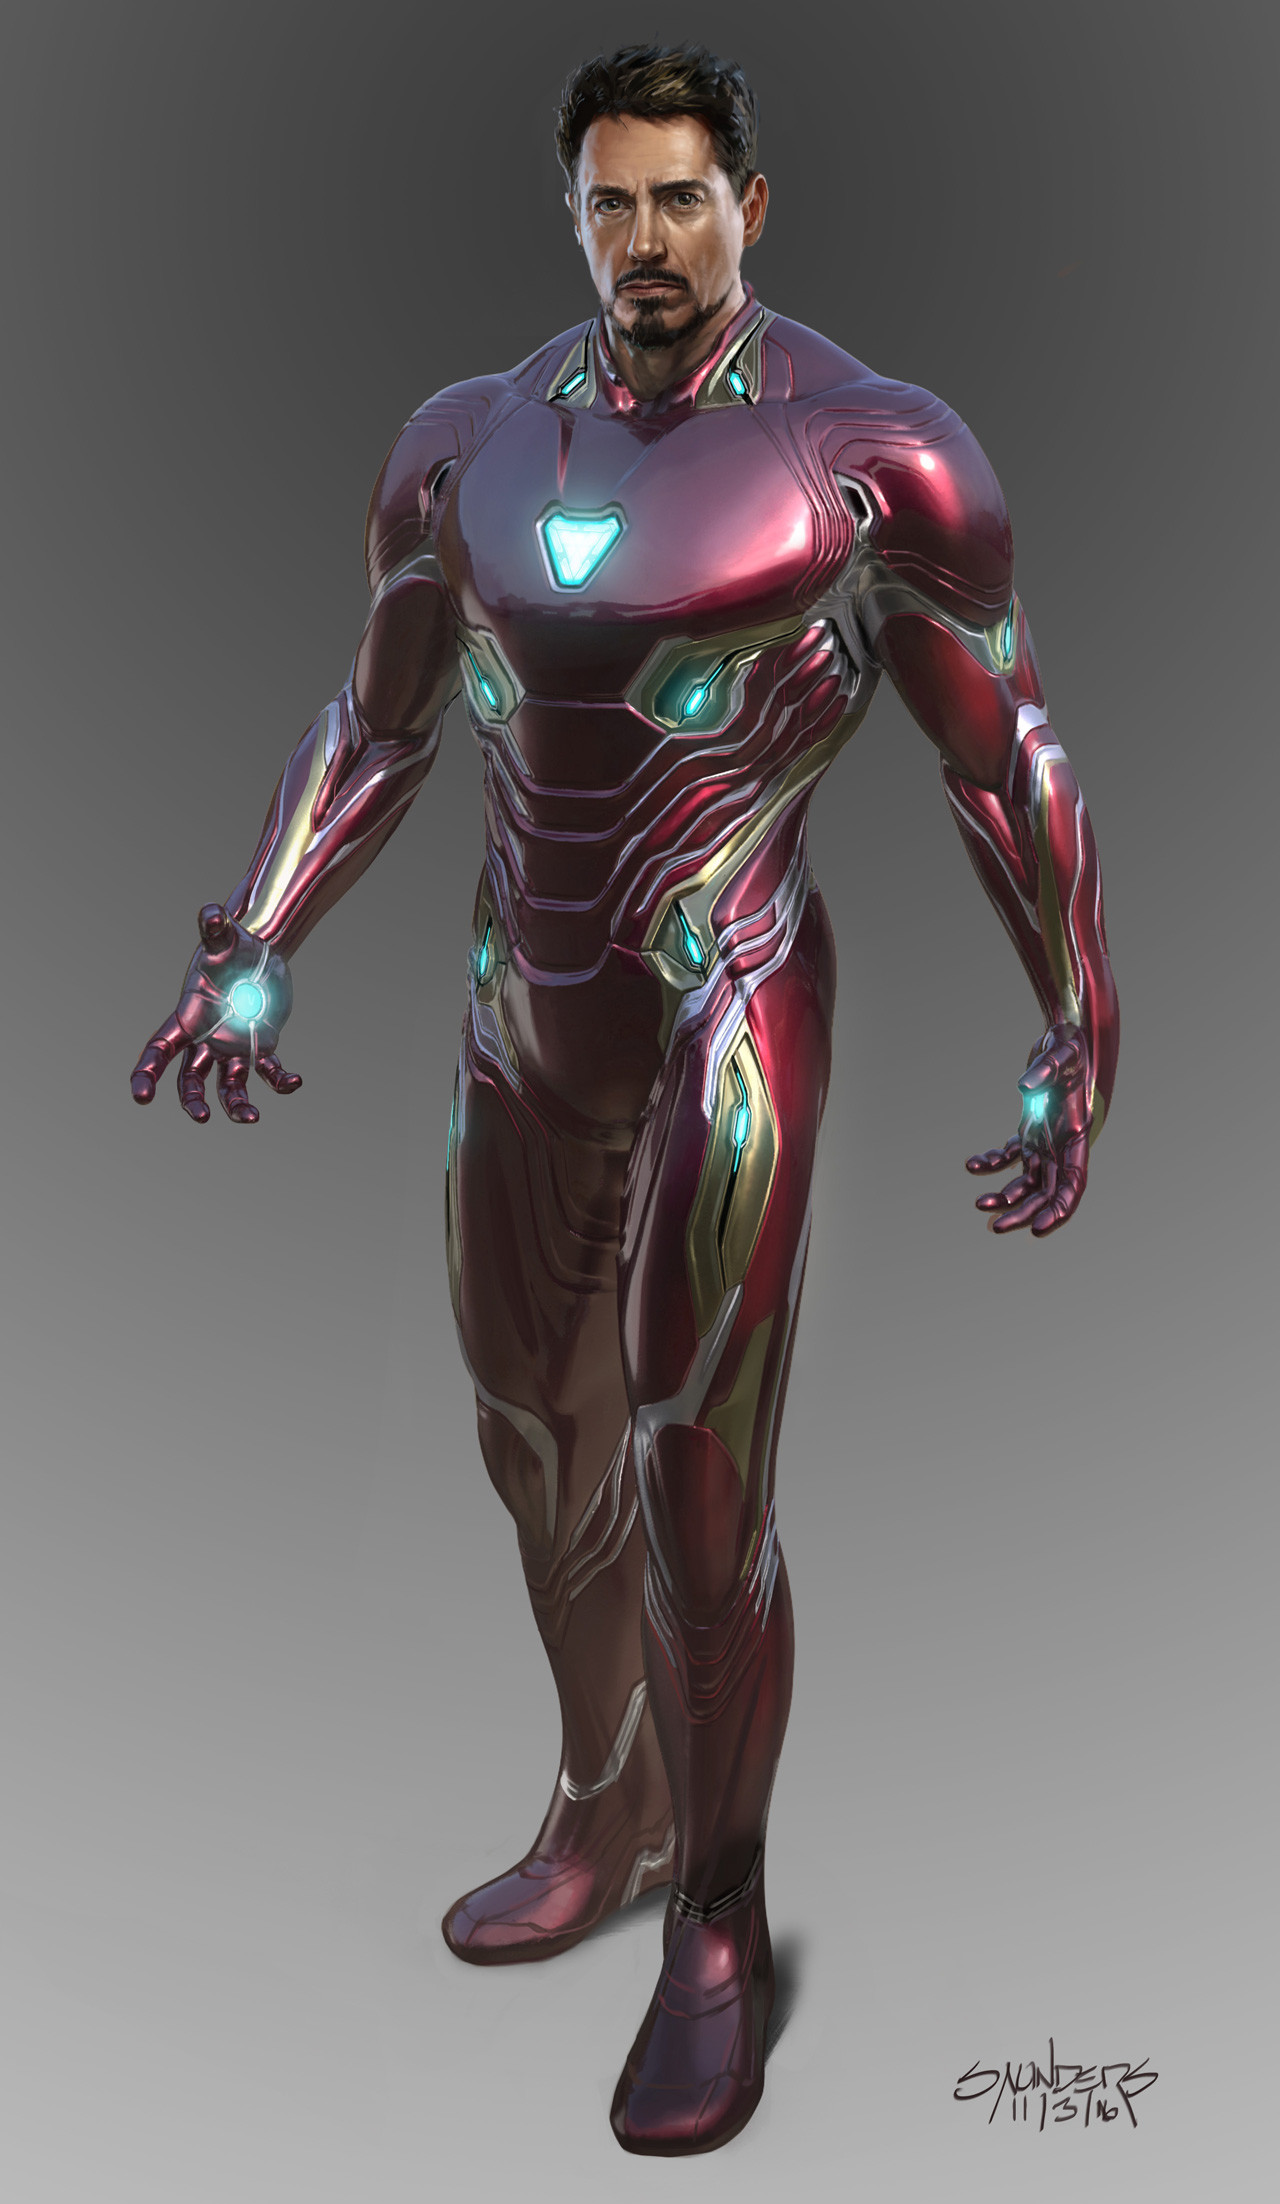 Artstation - Avengers: Infinity War - Iron Man Mk 50 Suit-Up